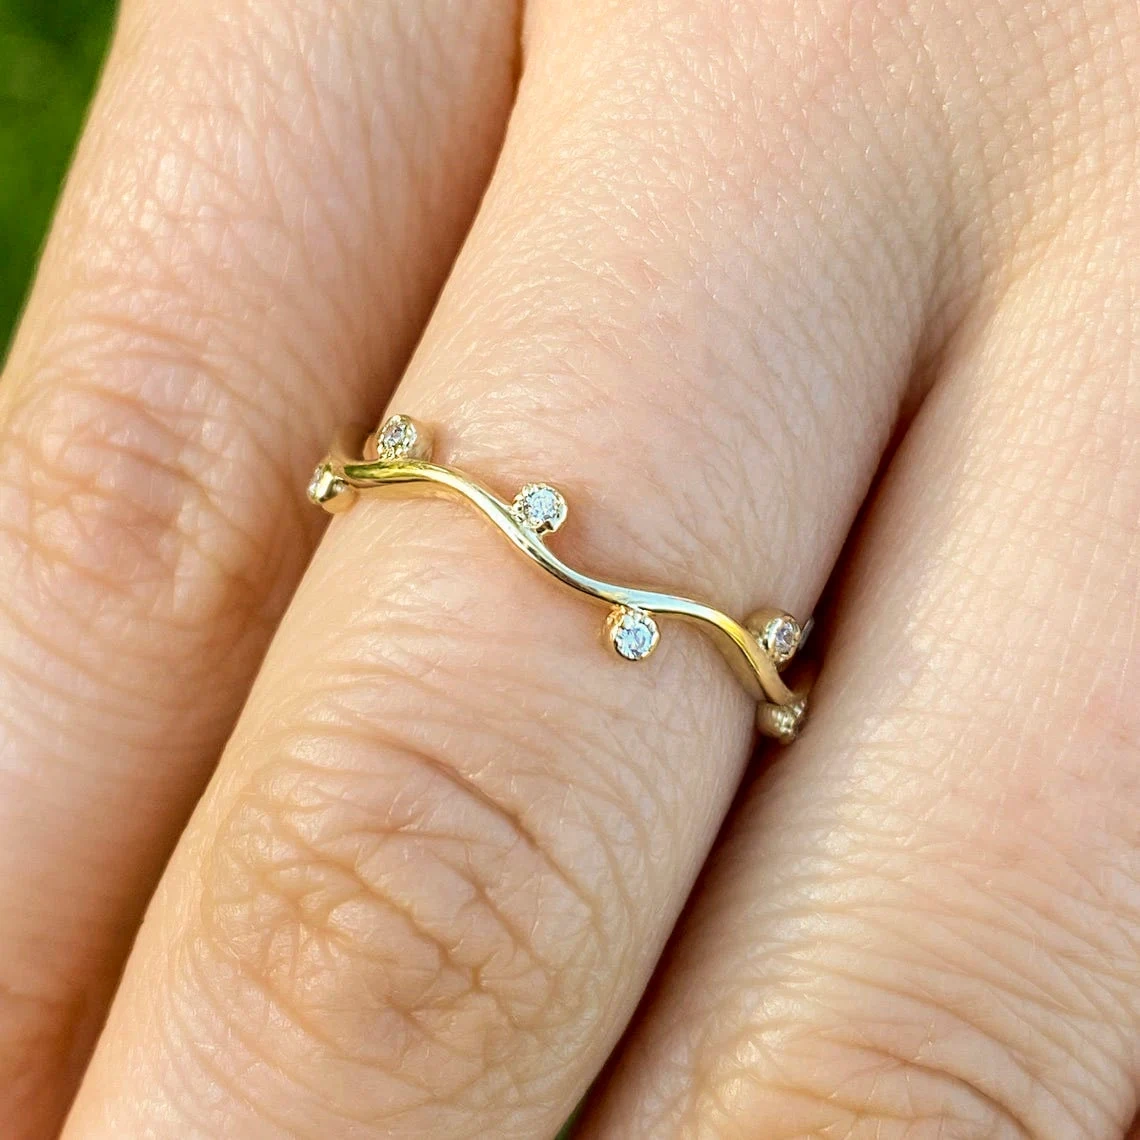 10K Solid Gold Tiny Diamond Plain Vine Ring Handmade Dainty Inset Diamond Delicate Stacking Gemstone Wavy Ring Minimal Everyday Ring for Her-11446496